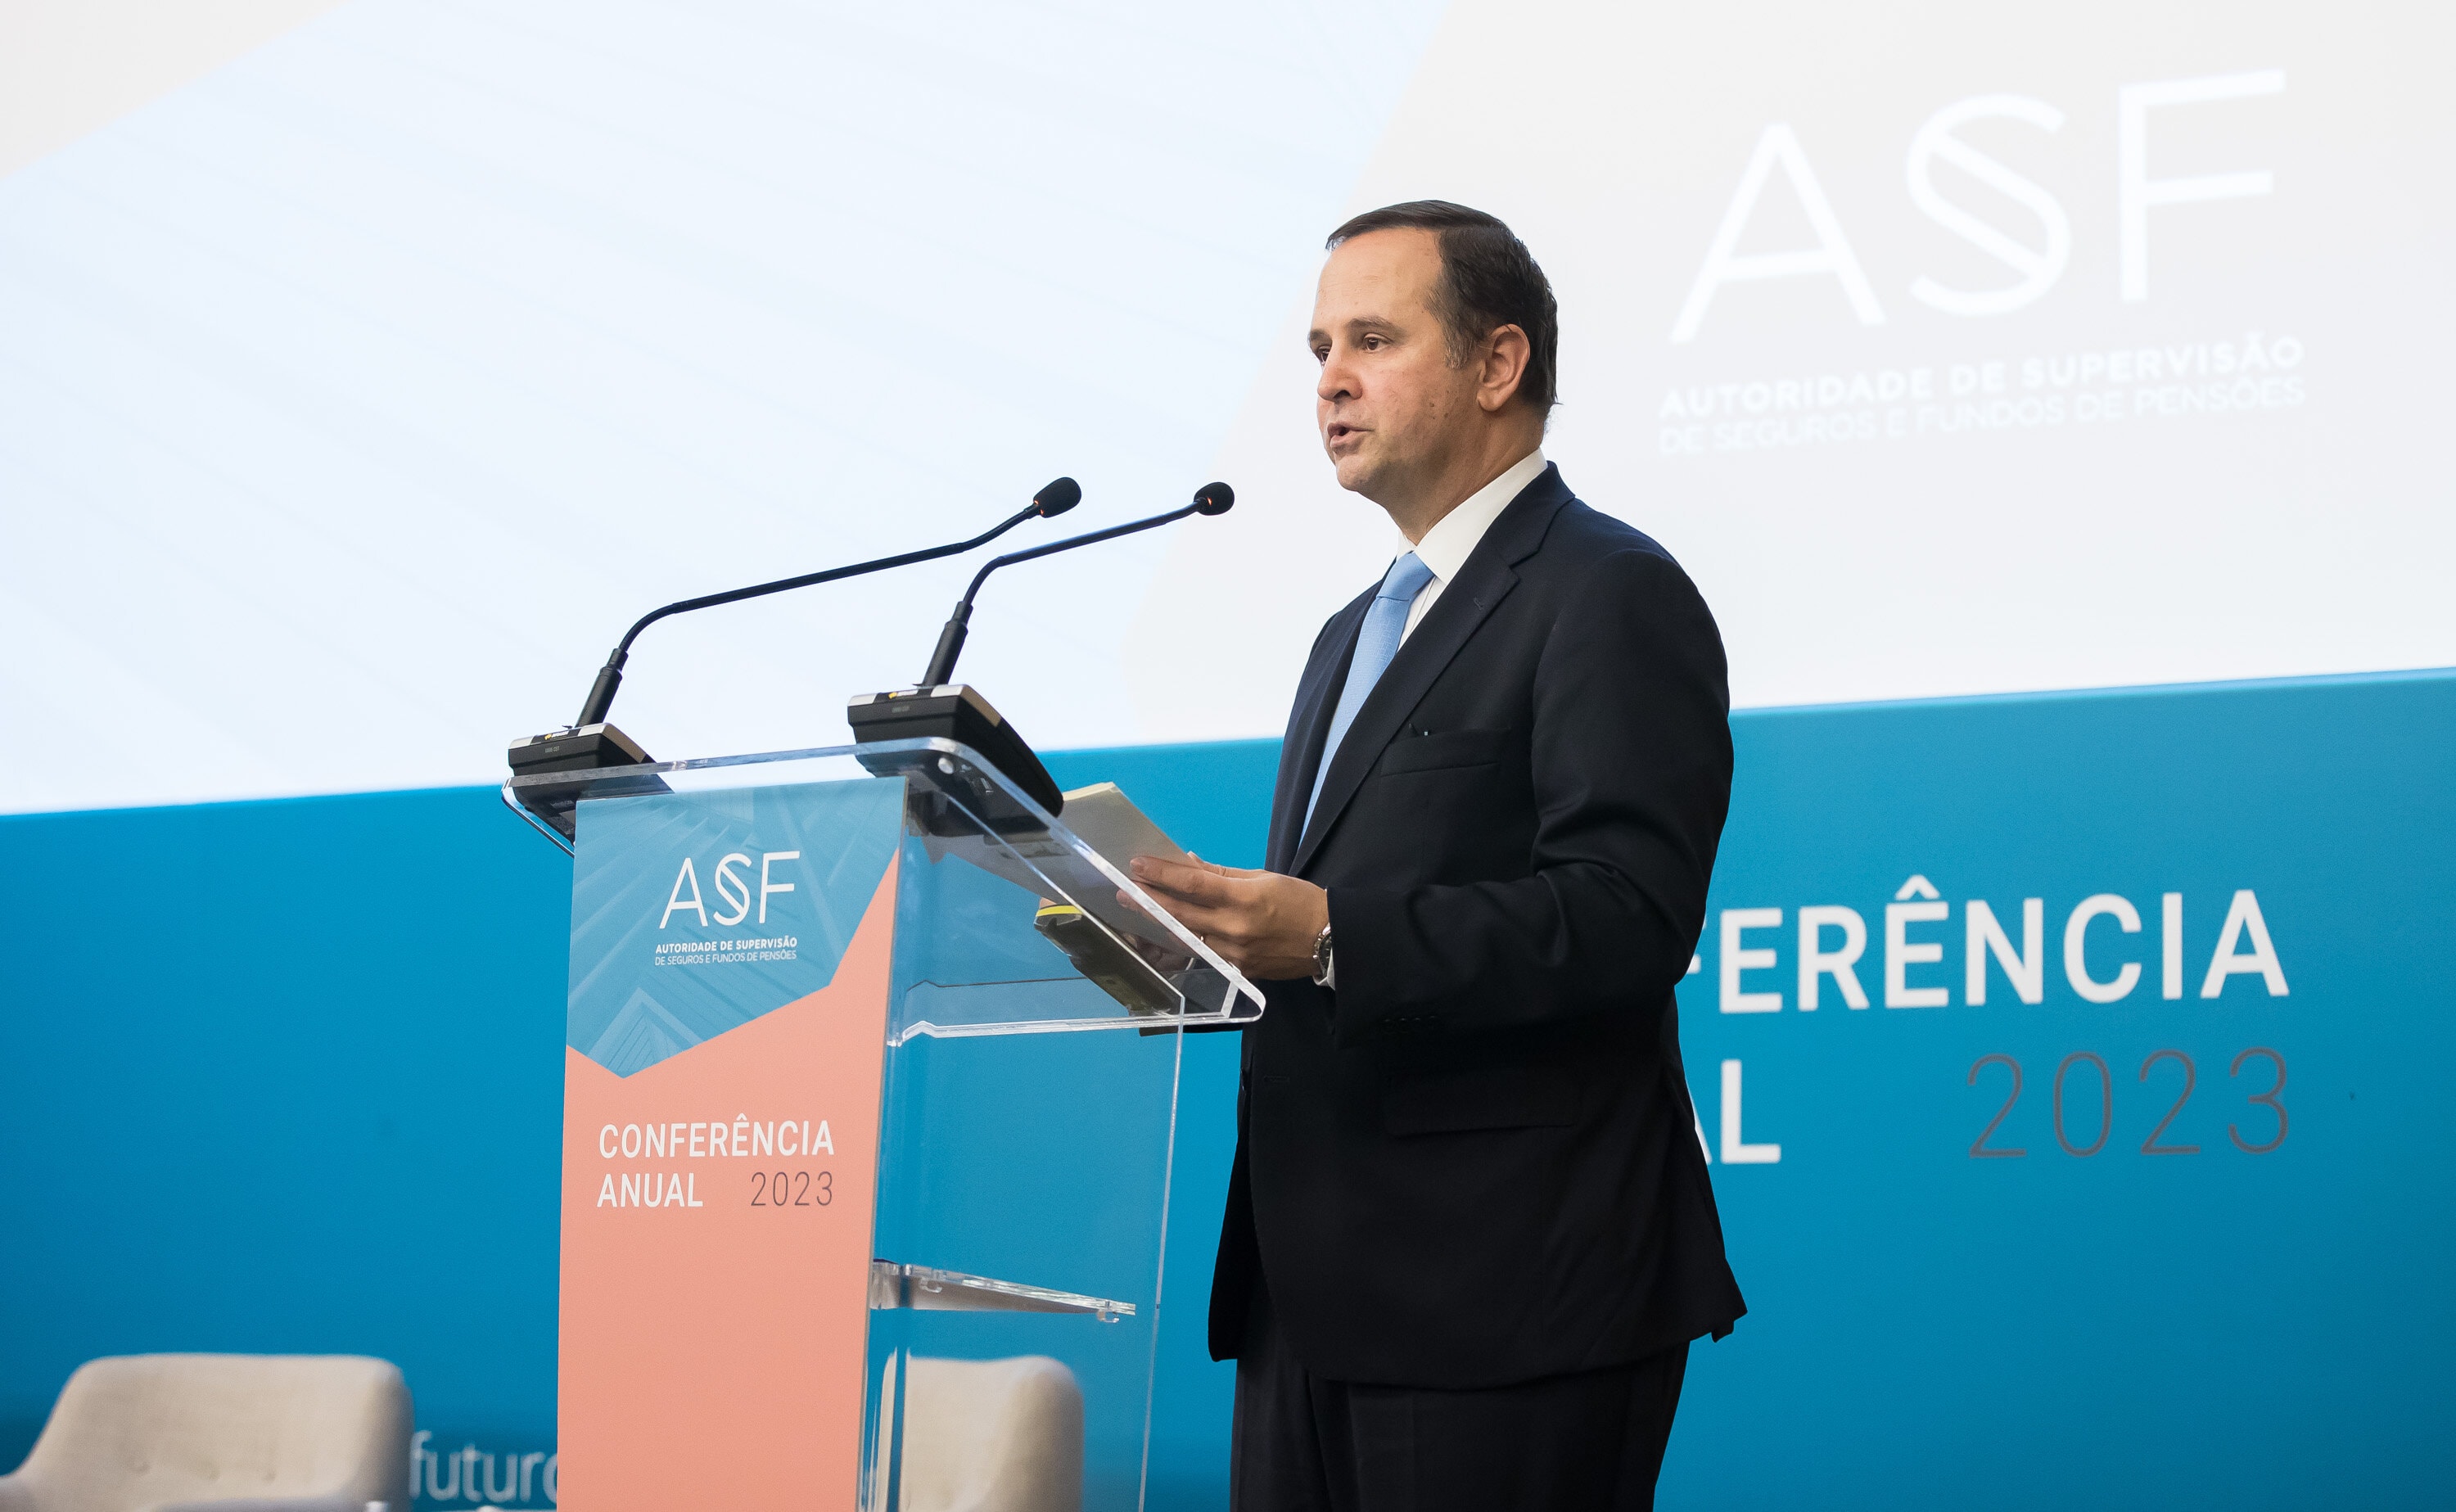 Conferência Anual ASF 2023 - Fotografia 2